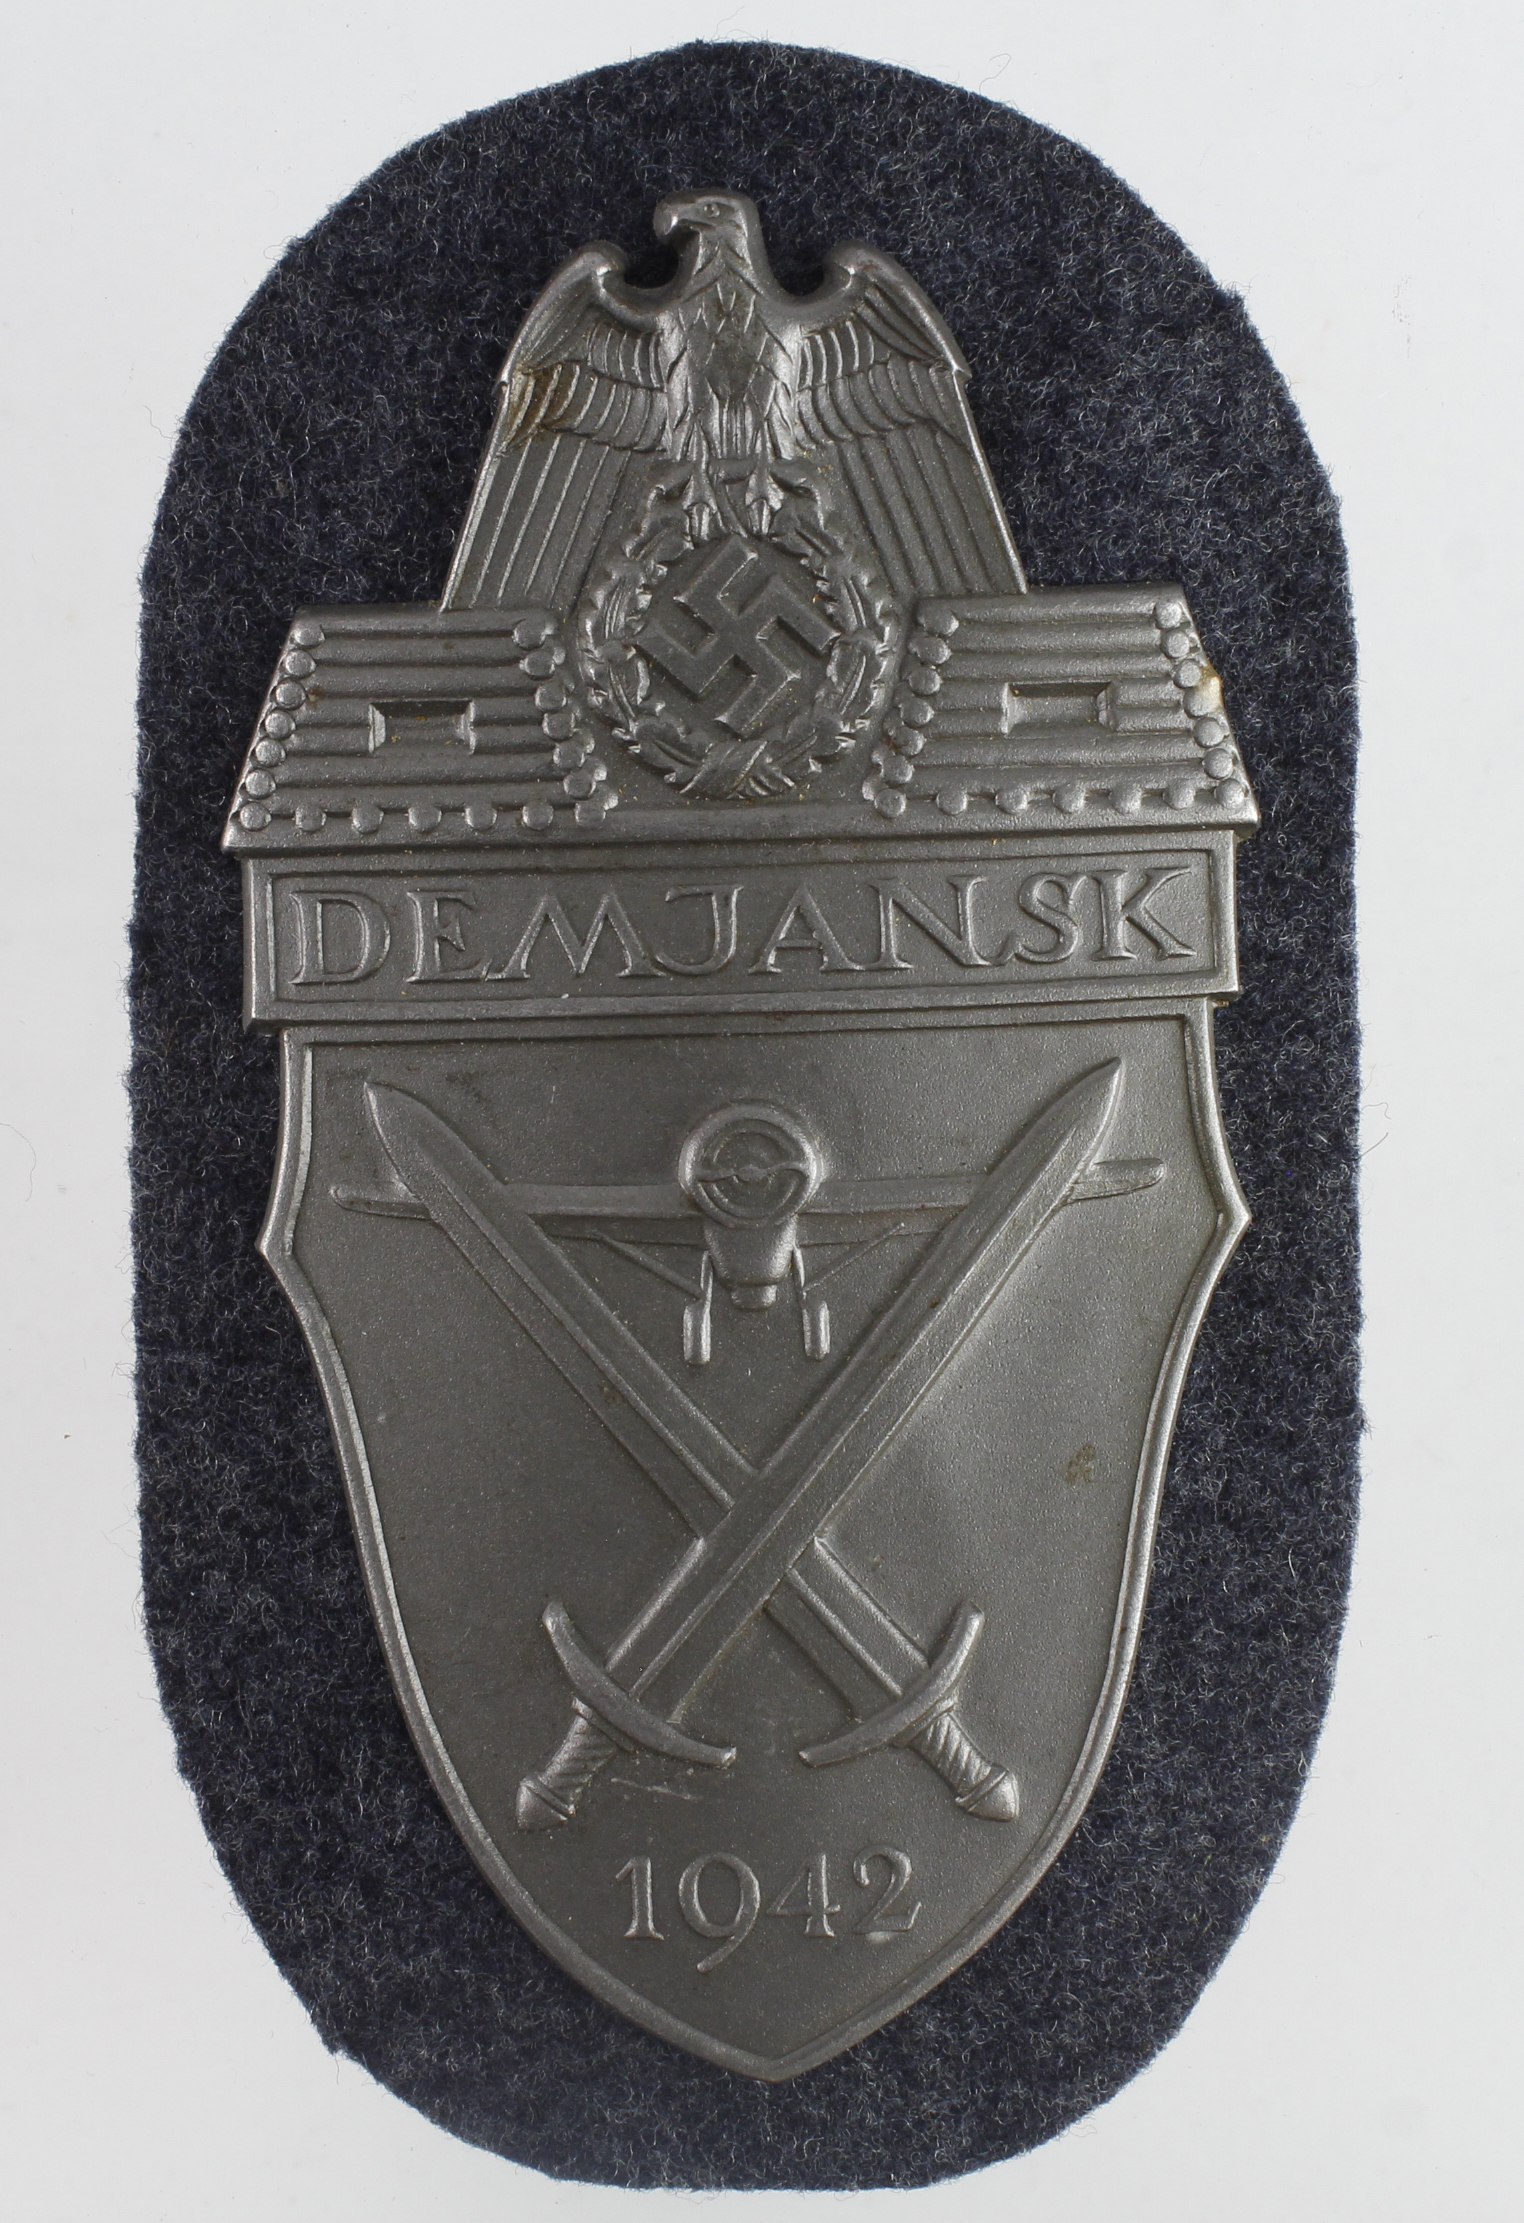 German Demjansk 1942 arm shield with blue grey backing